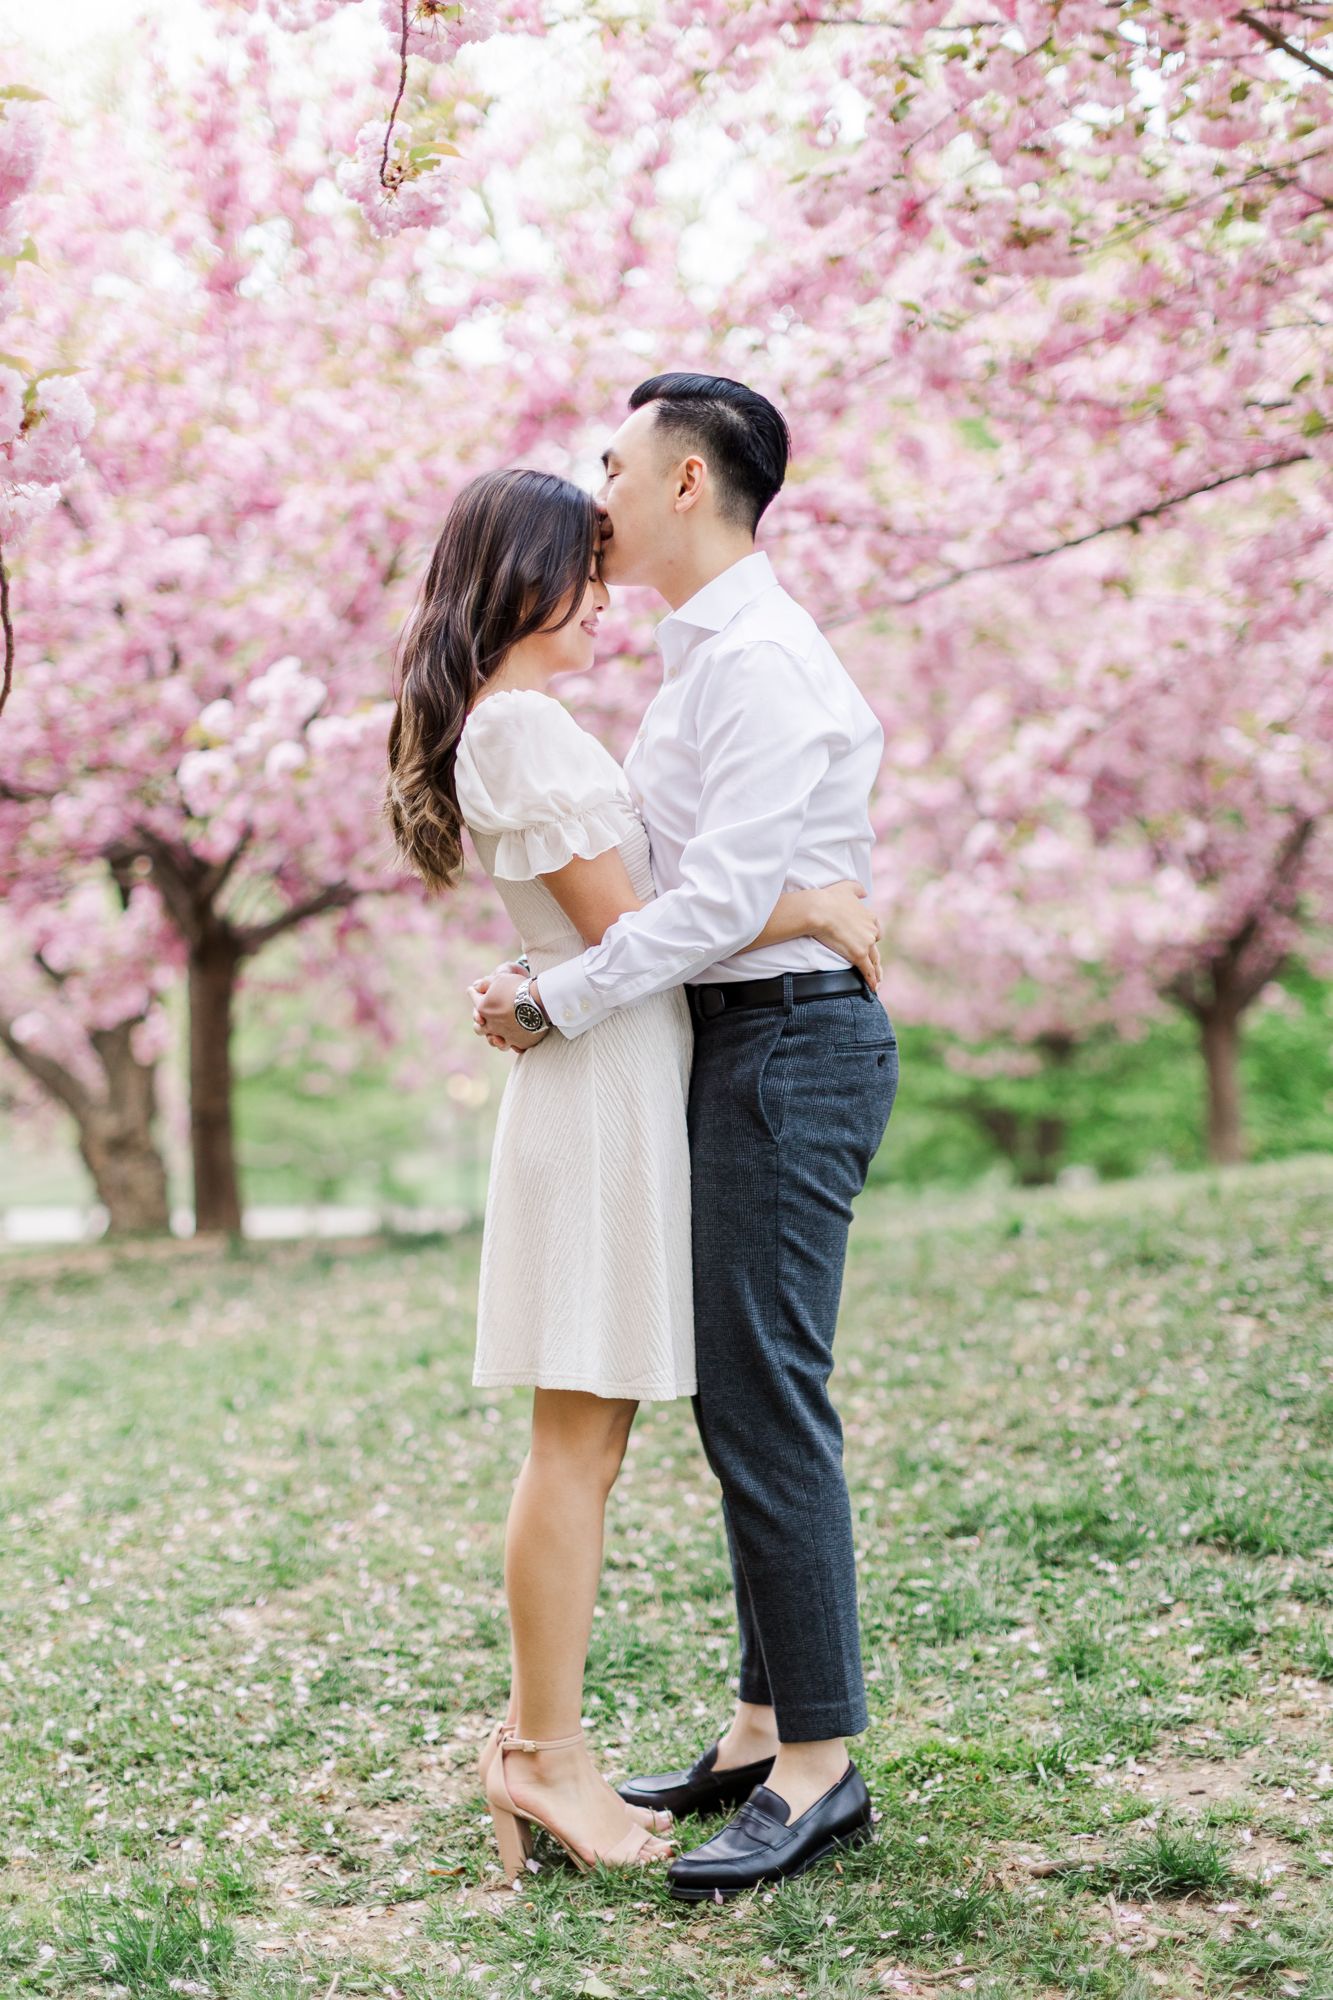 Magical cherry blossom photo shoot